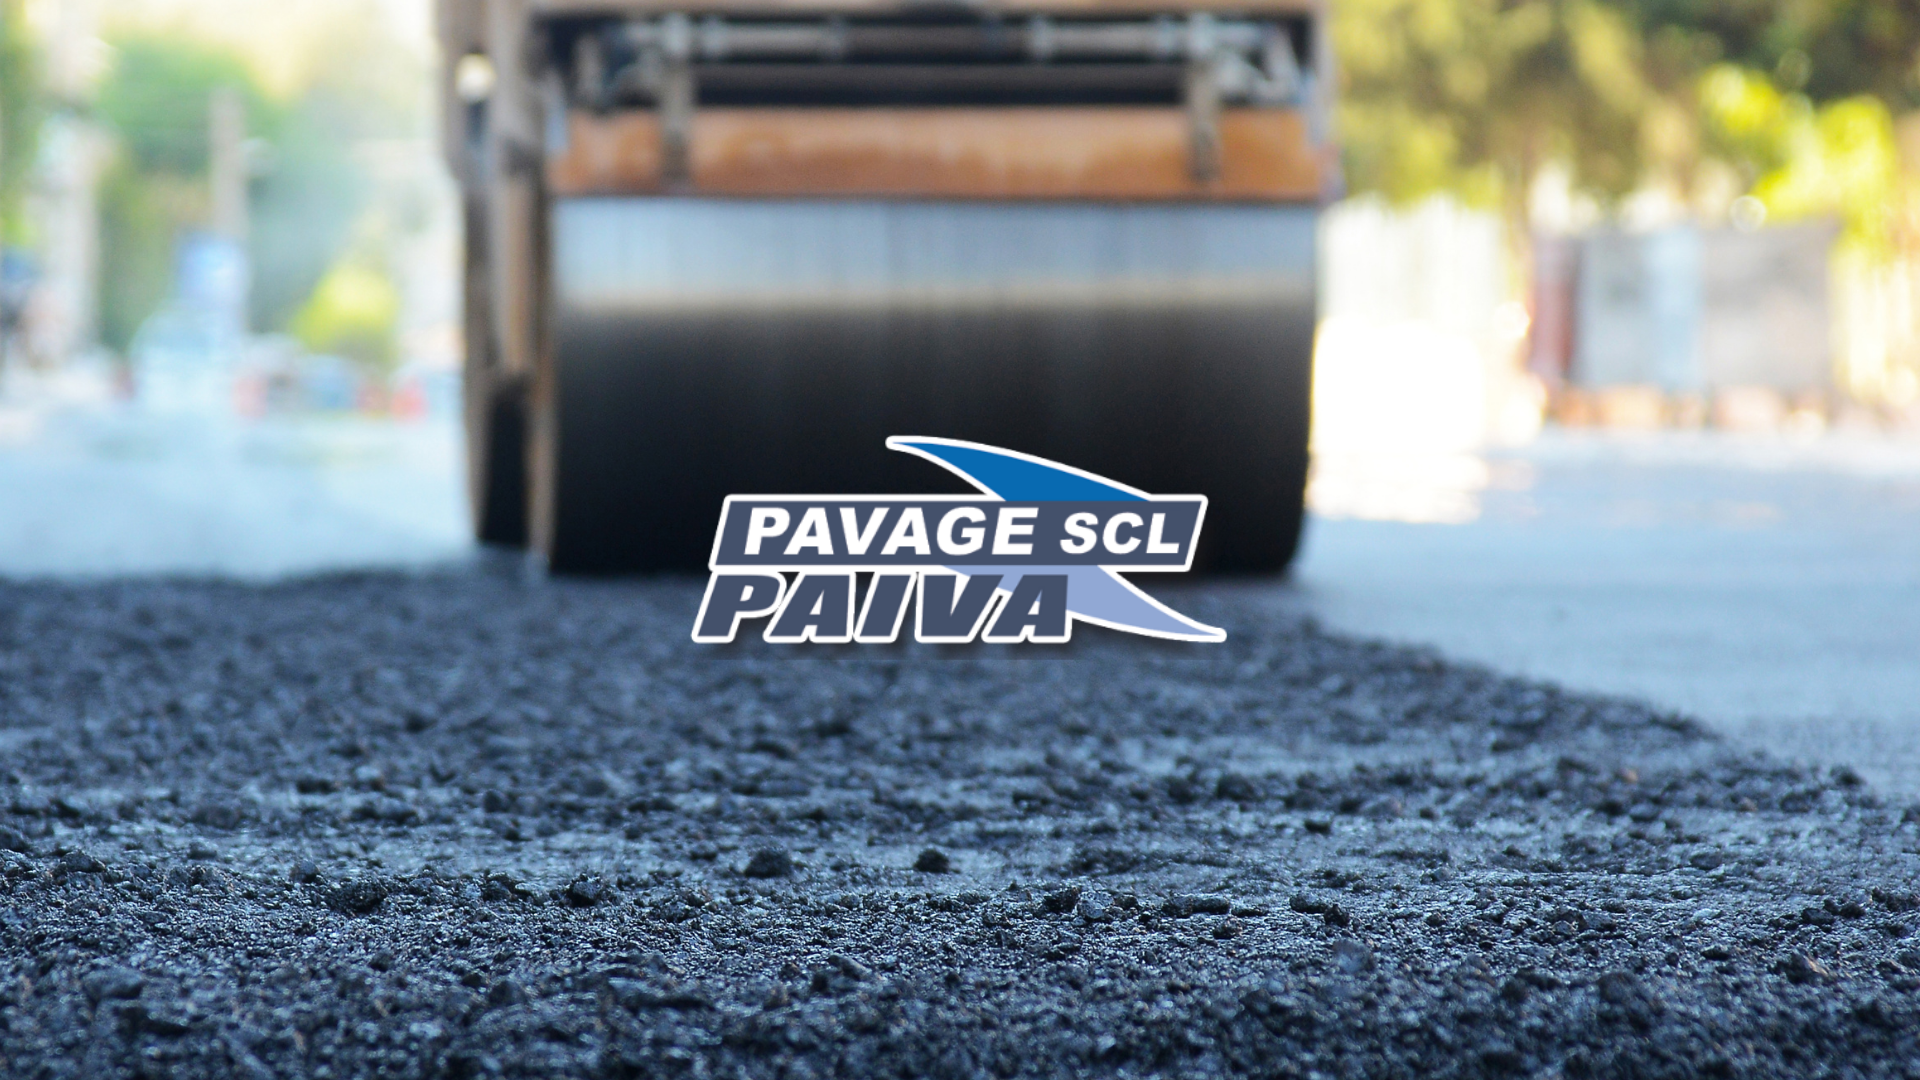 Pavage SCL Paiva logo banner image service asphalte